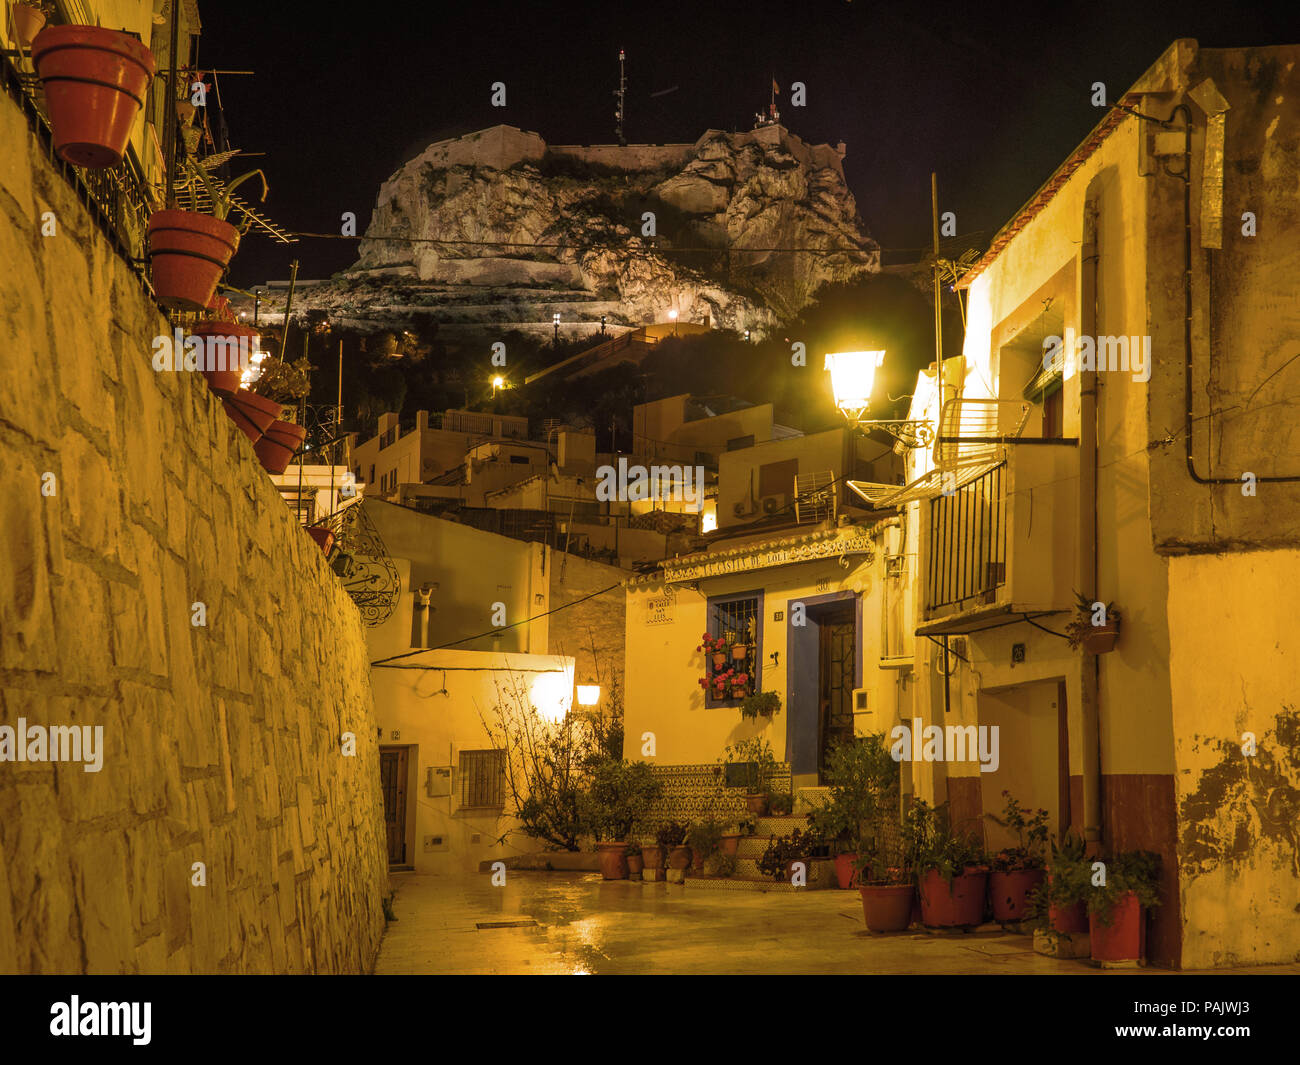 dim light of street lamps illuminates the sleeping city, Alicante. Spain Stock Photo